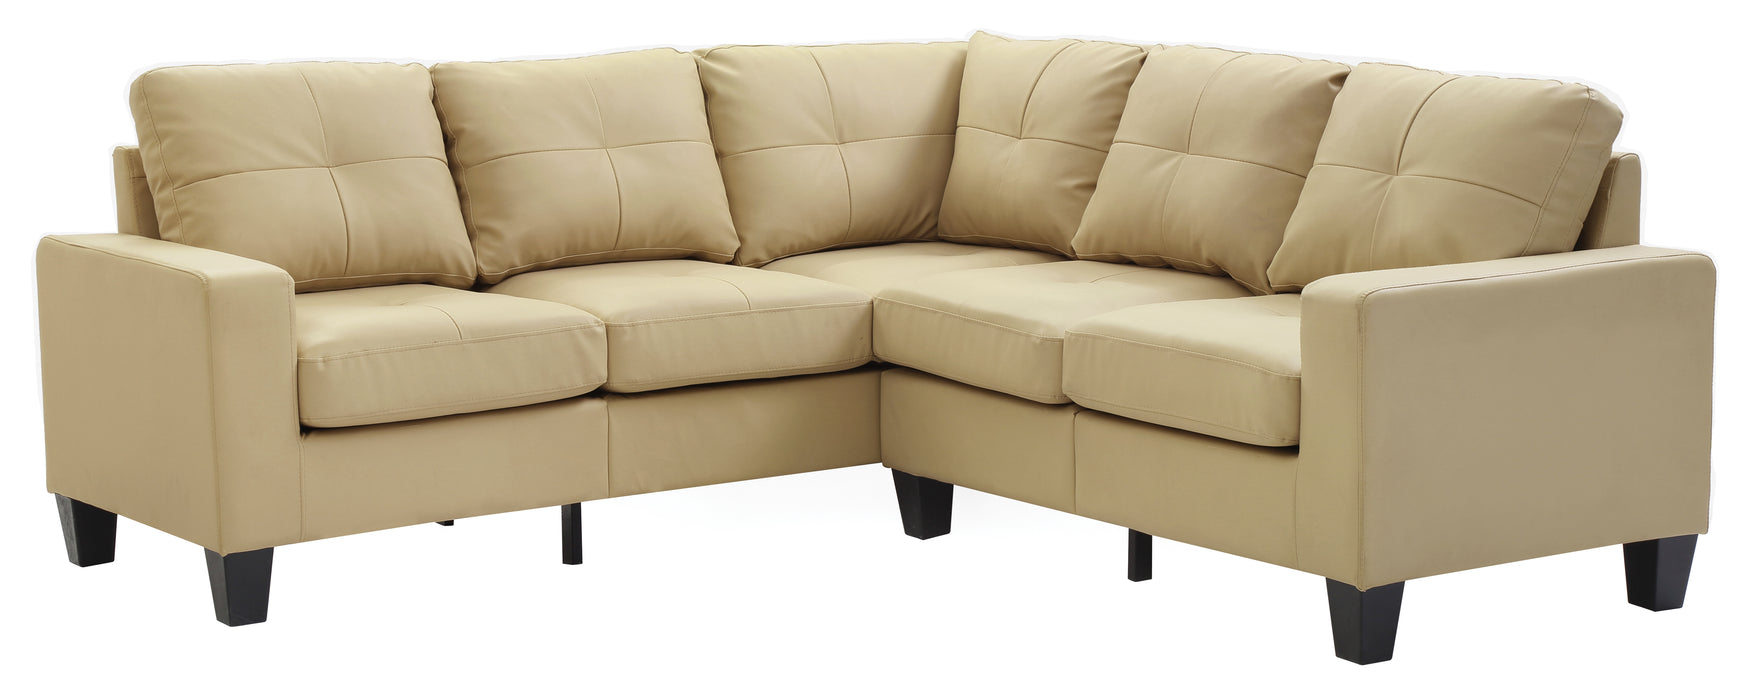 Glory Furniture Newbury G461-500 B-SC Sectional